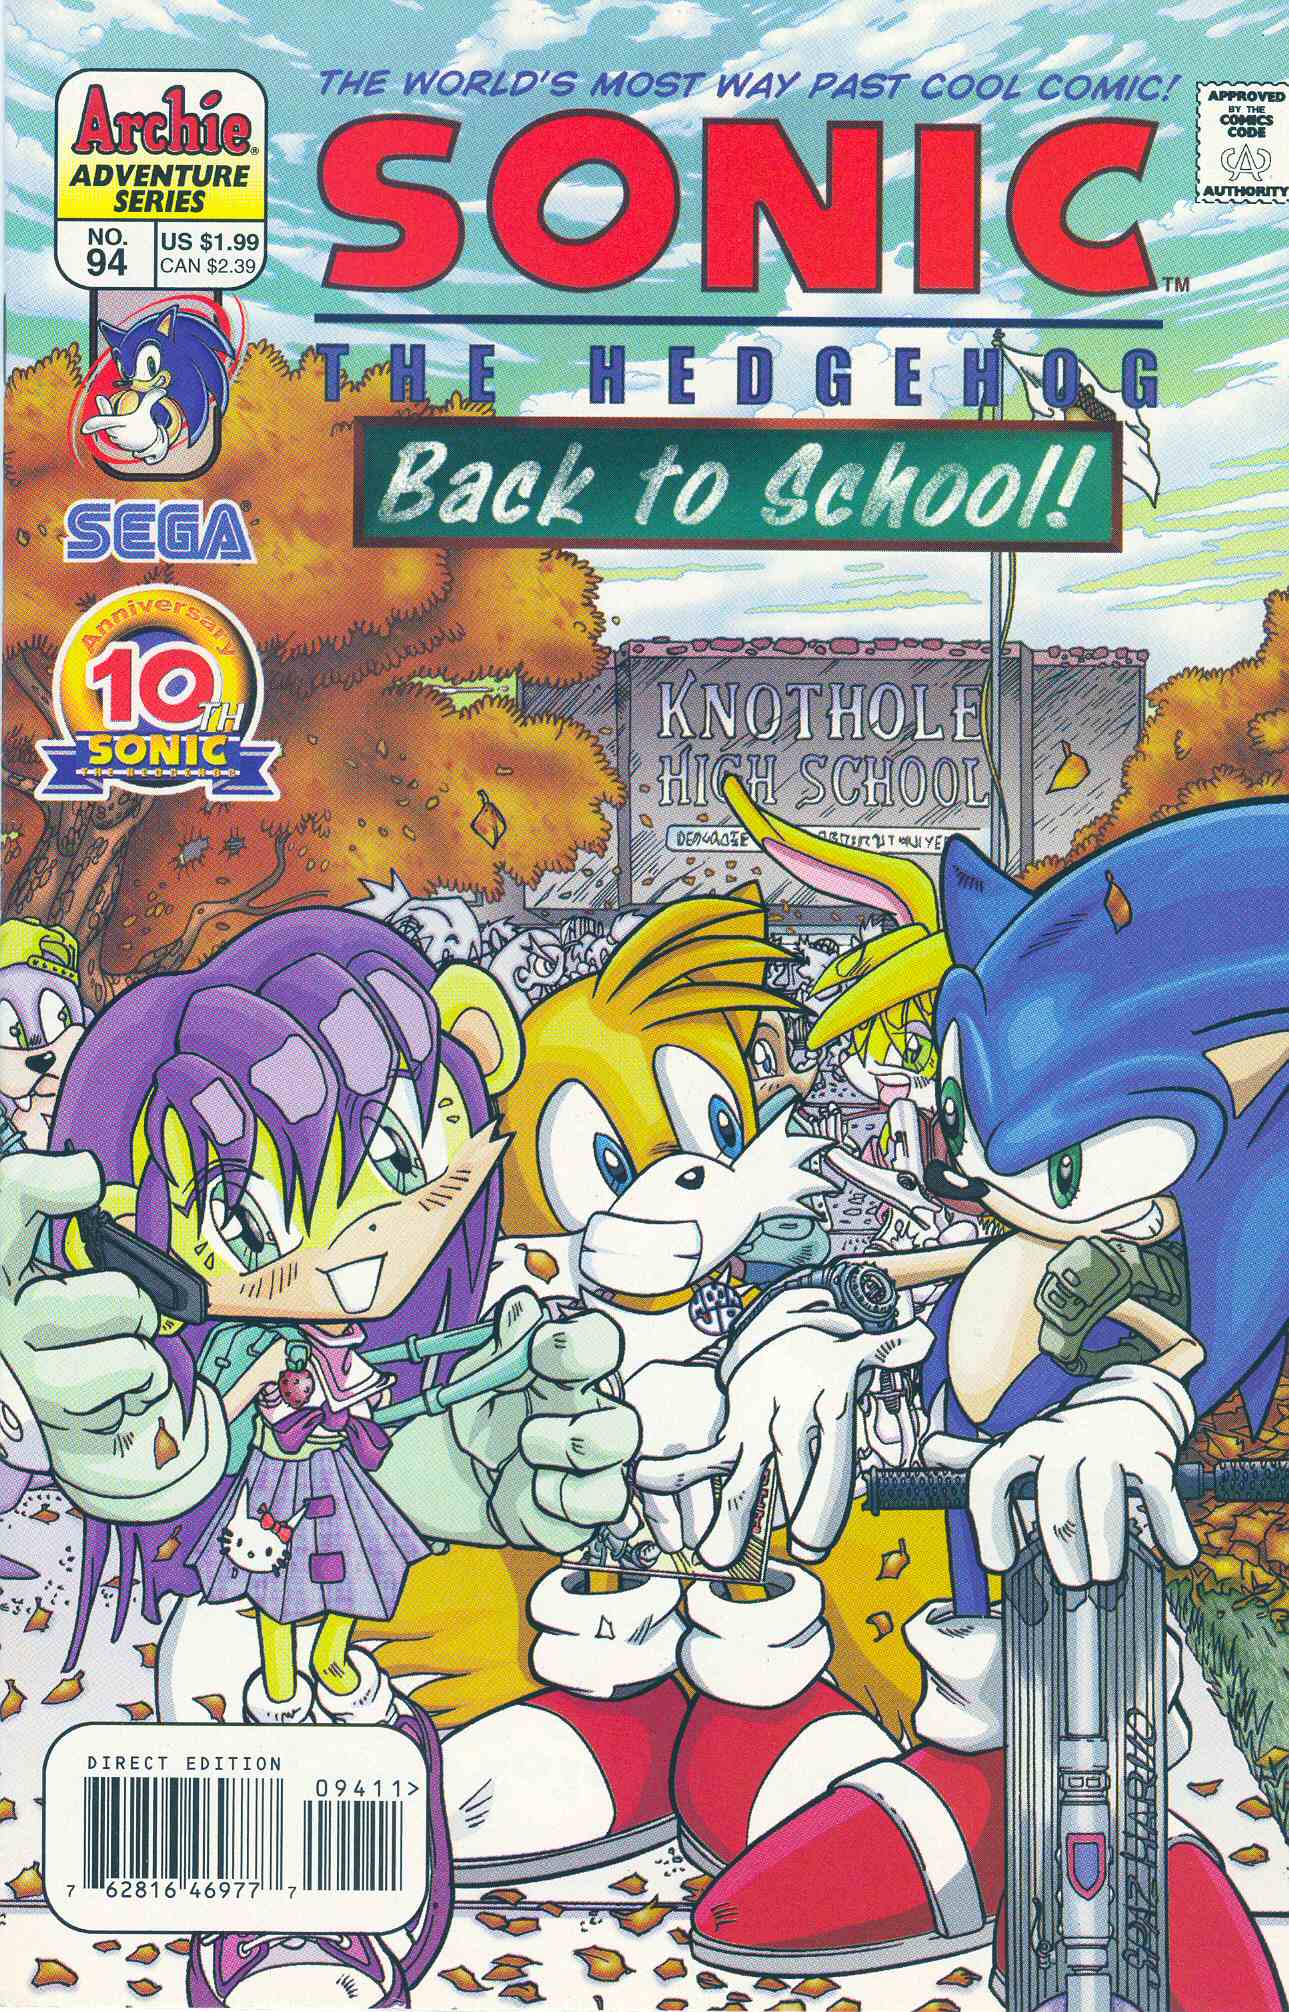 Sonic - Archie Adventure Series April 2001 Comic cover page